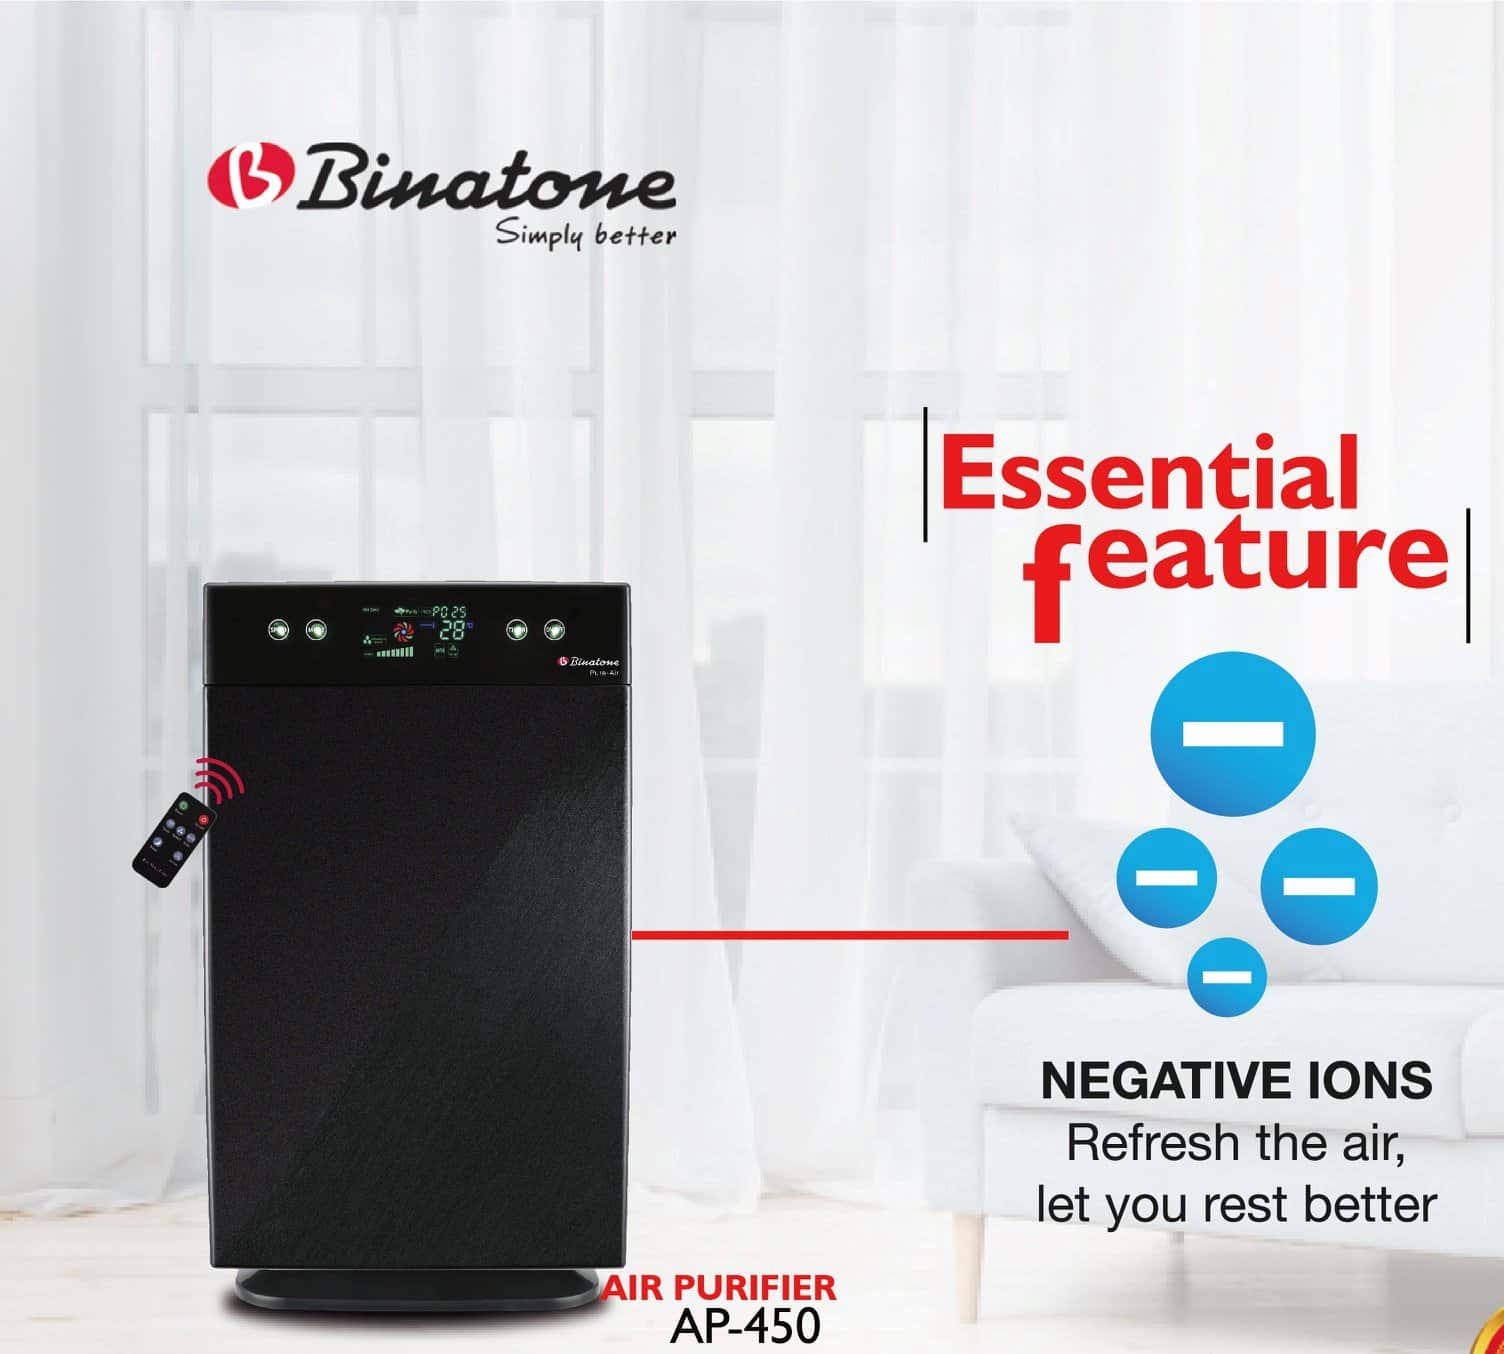 Binatone air purifier works with Negative ionc